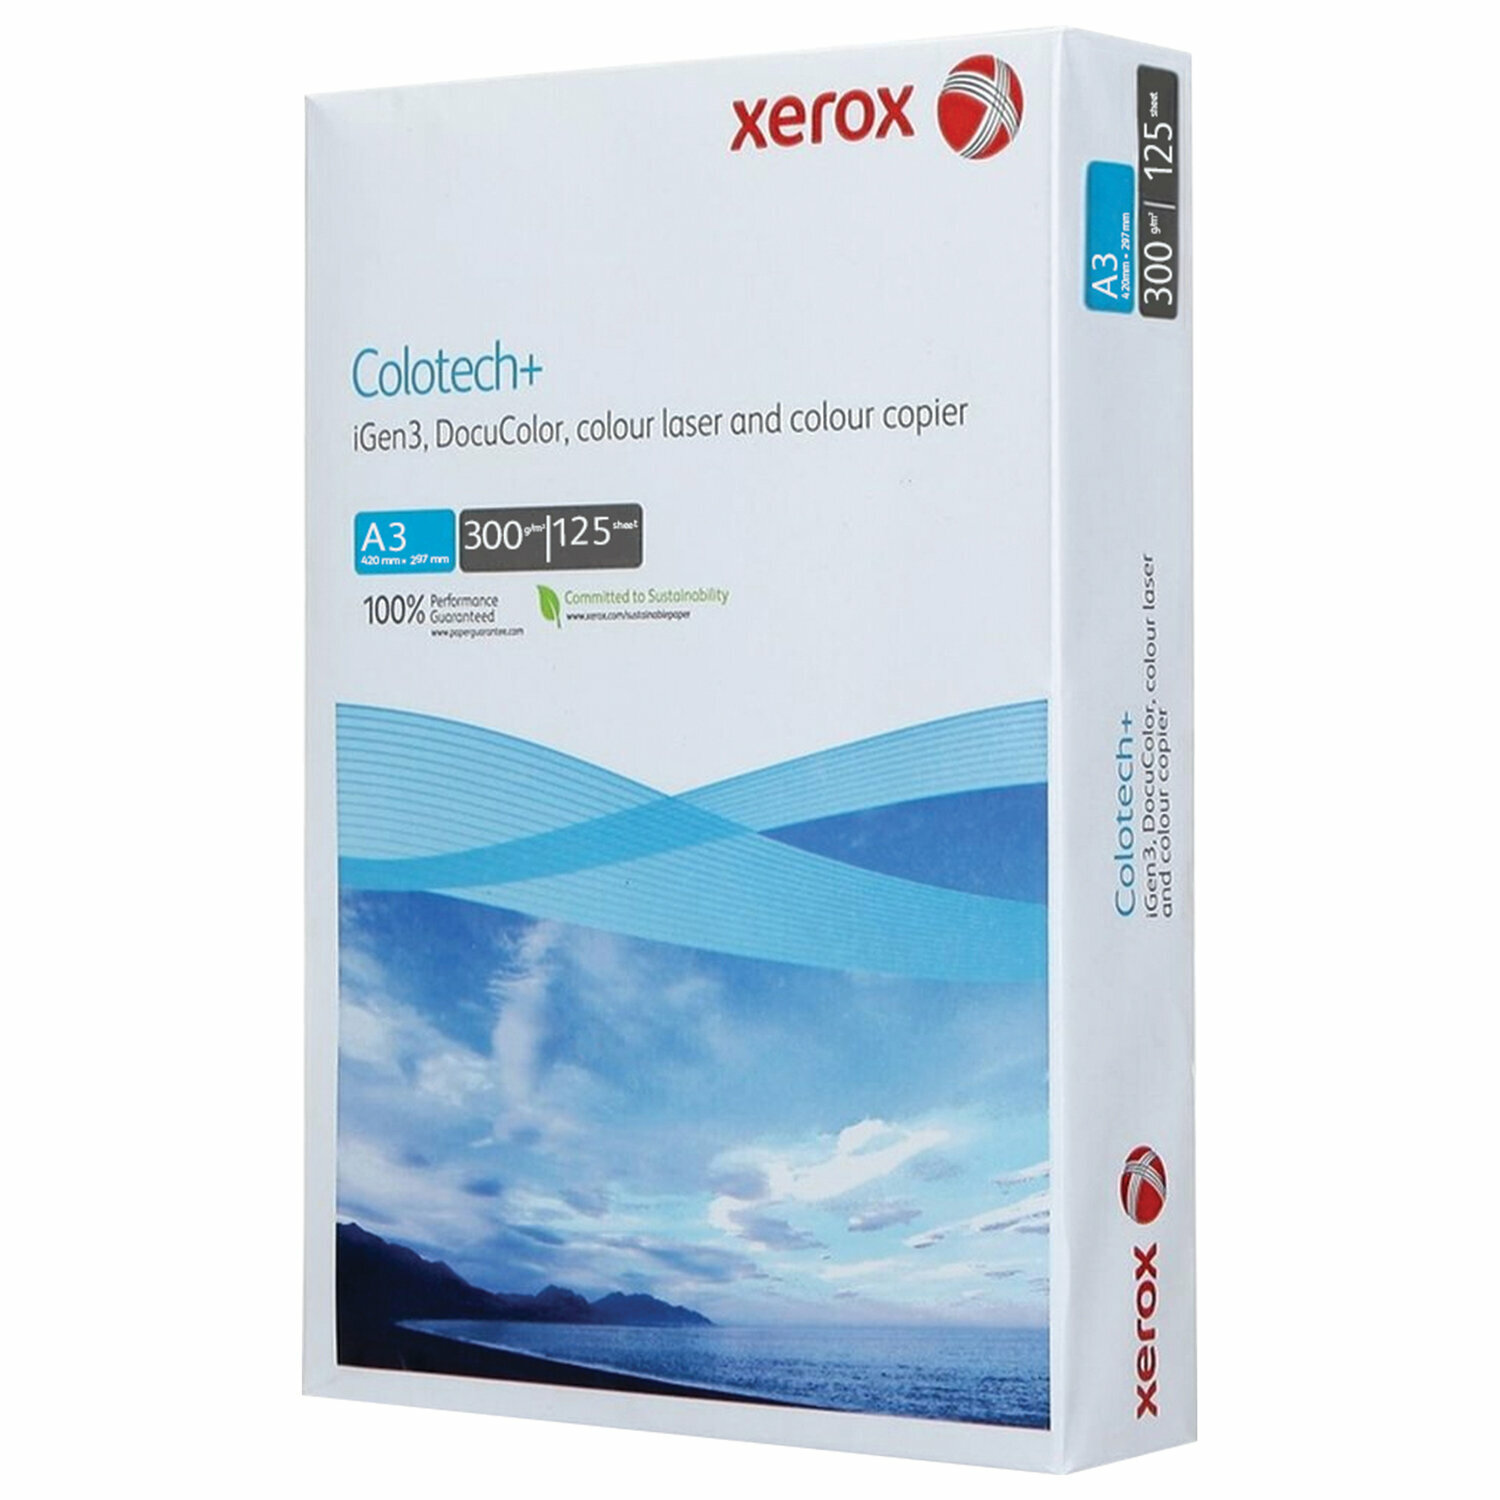 Бумага для цветной лазерной печати XEROX COLOTECH+ Blue, А3, 300г/м2, 125 л, 161% CIE, 003R97553